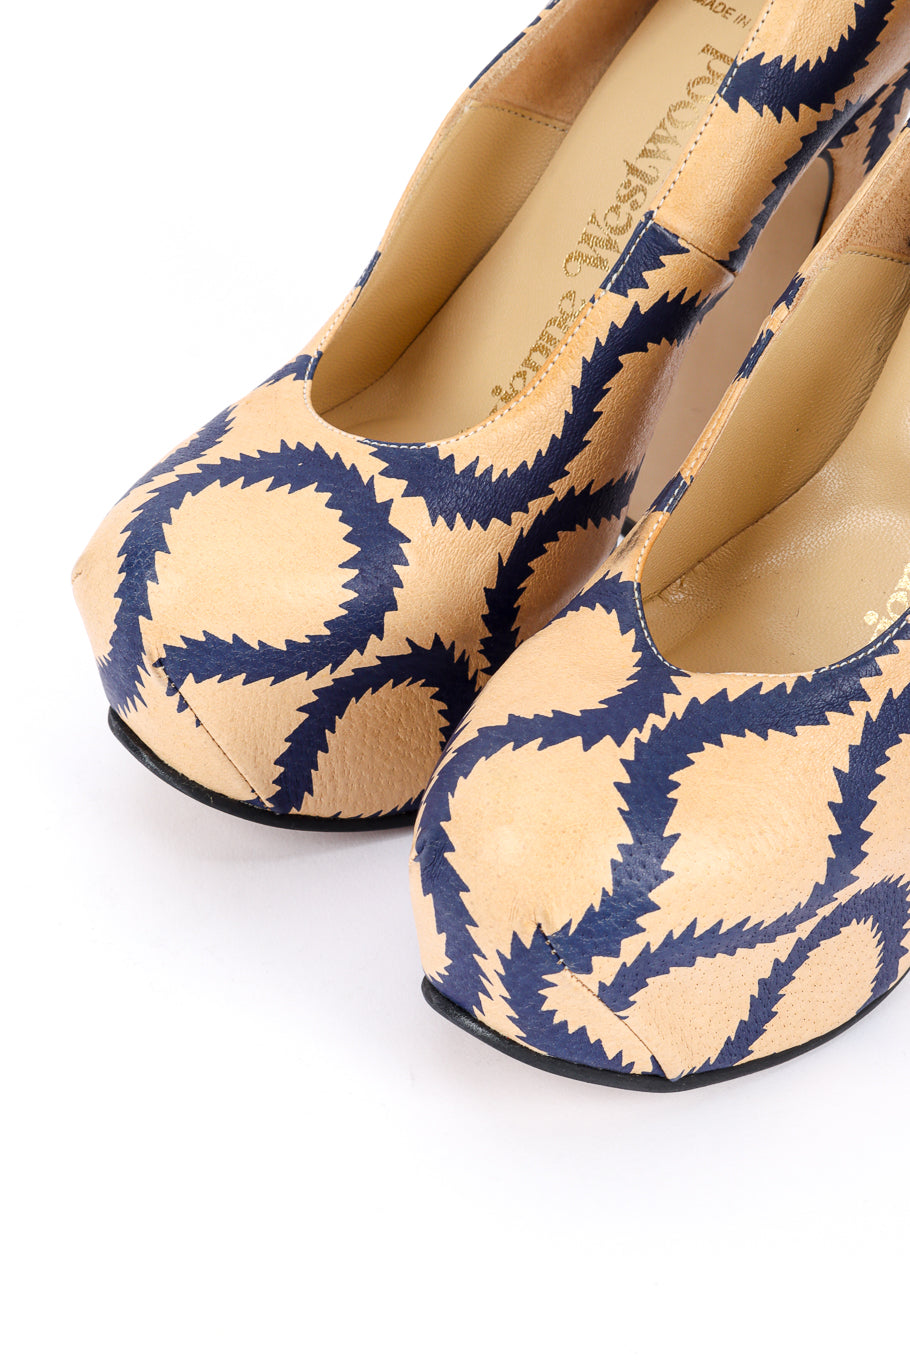 Vivienne Westwood 2013 F/W Squiggle Print Leather Court Shoe toe closeup @recessla